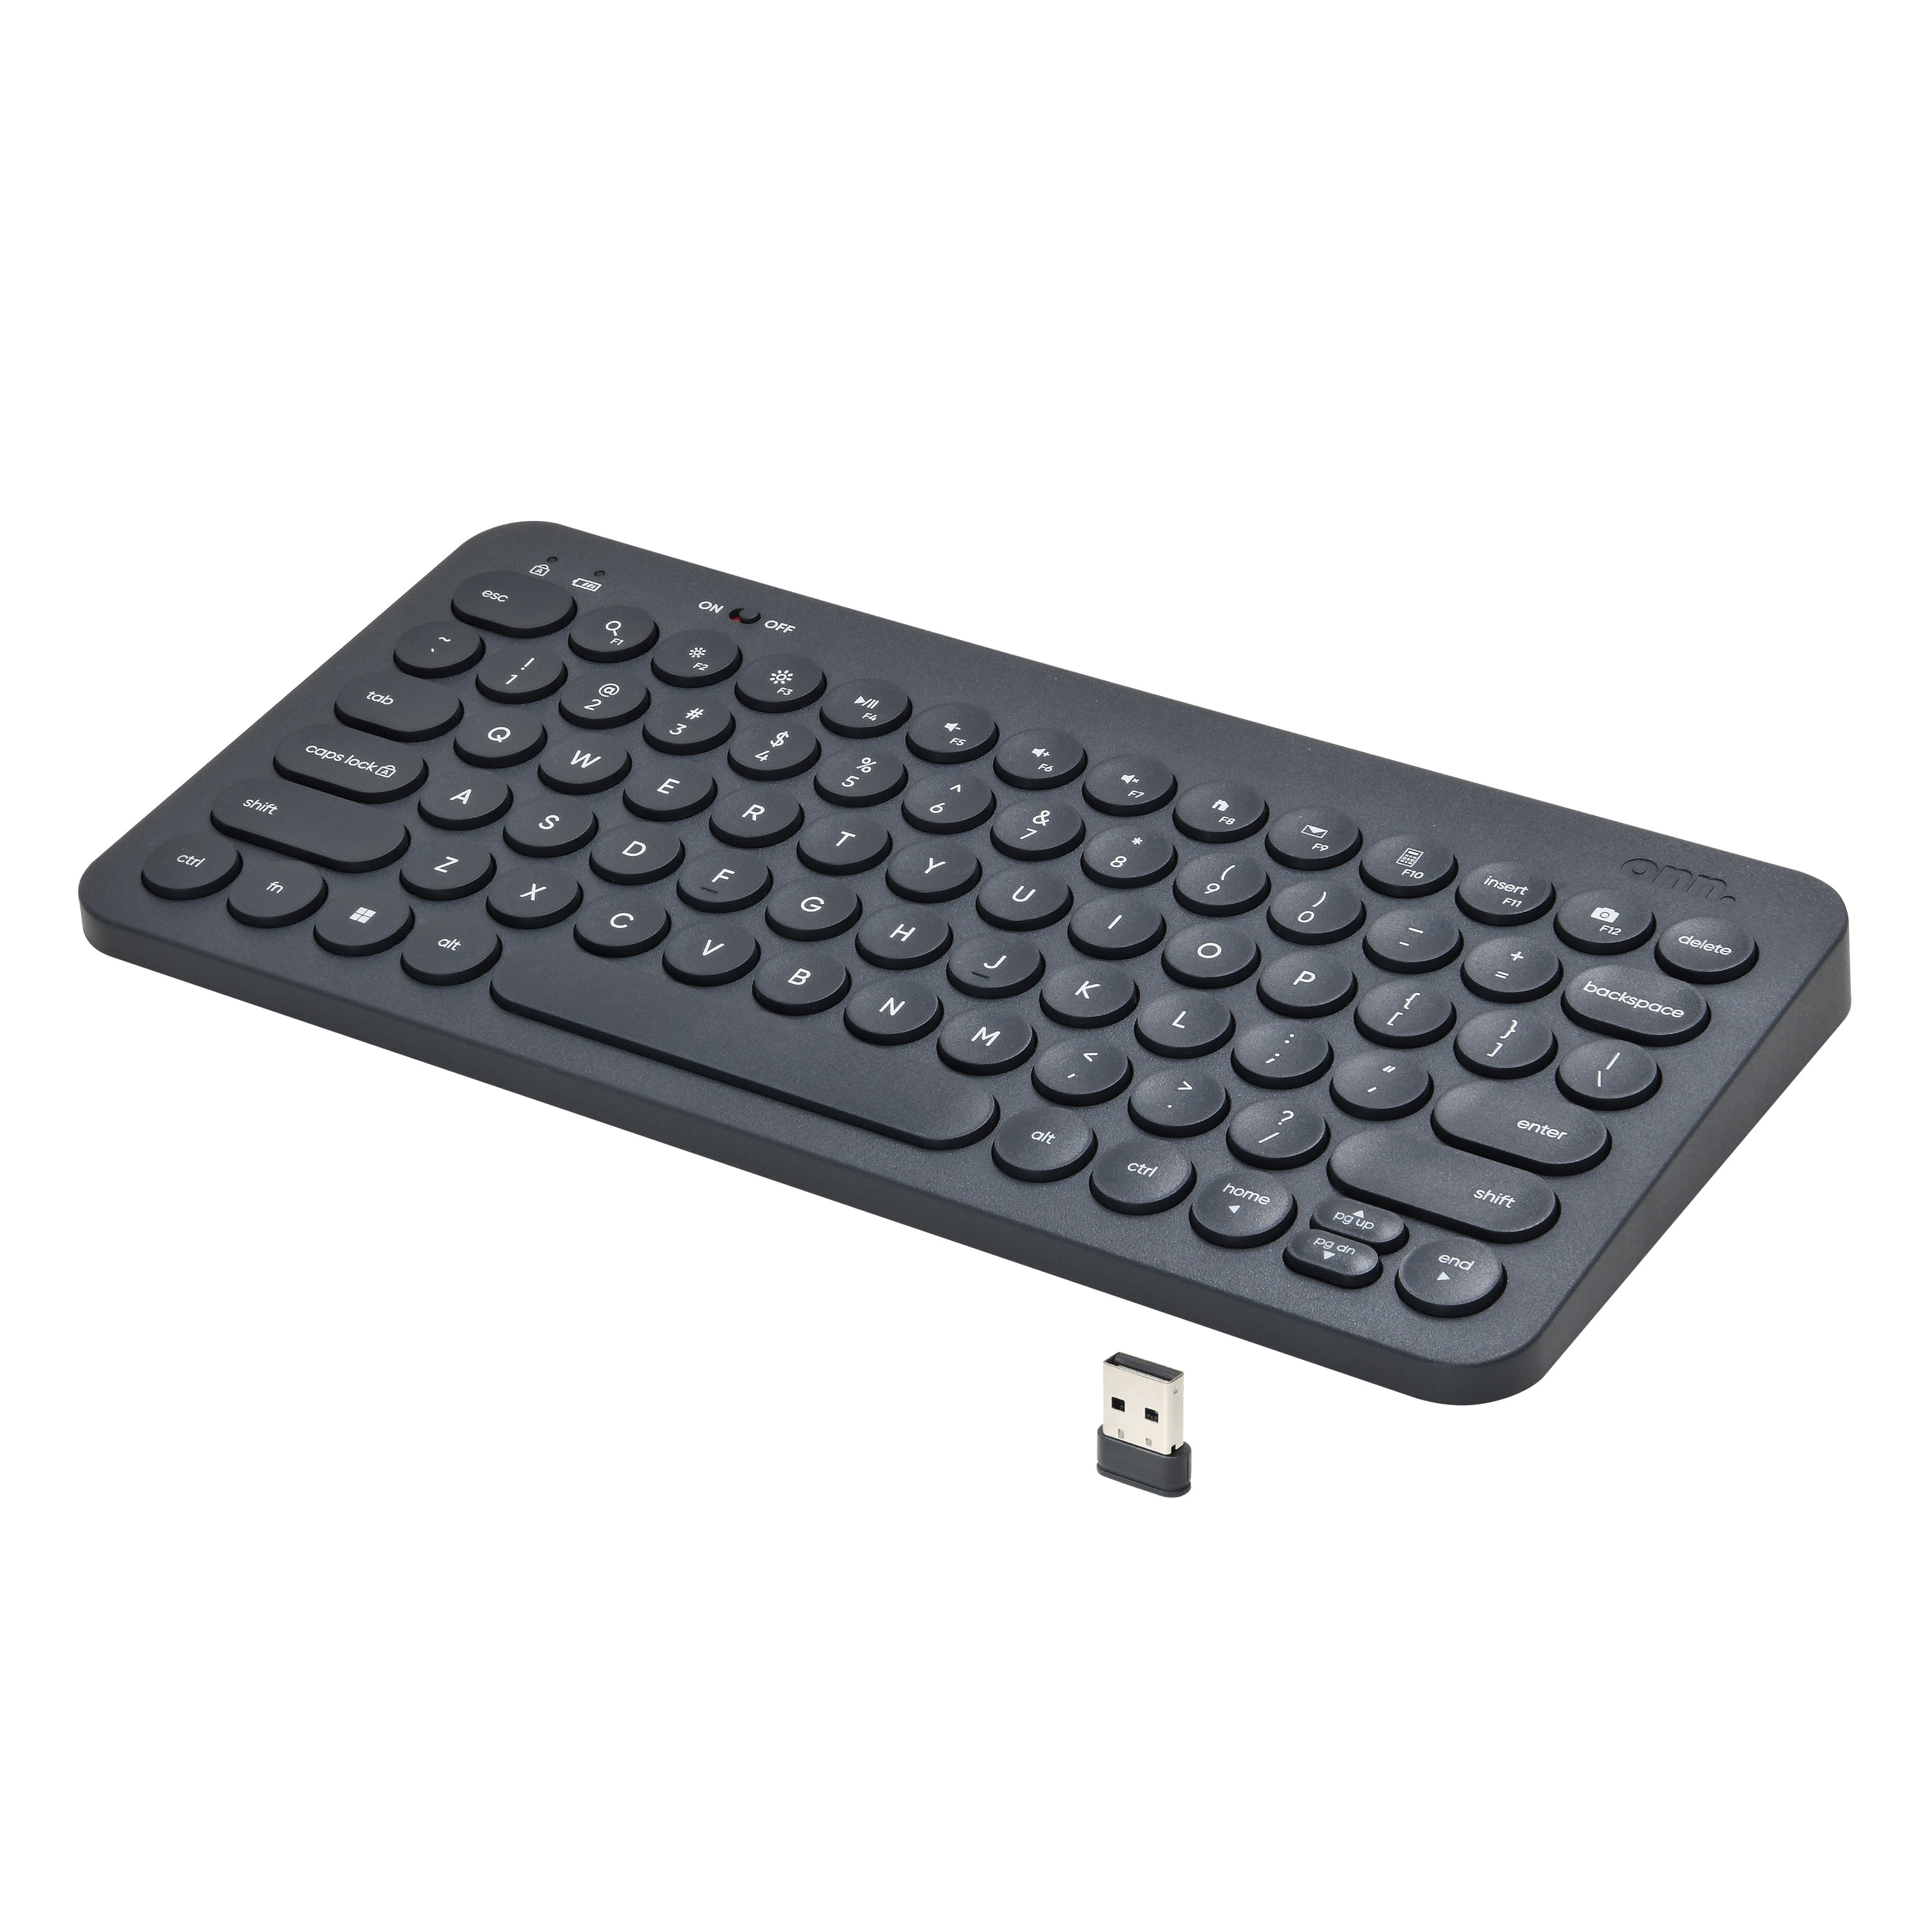 onn. Compact Wireless Keyboard,USB Receiver, 78 Keys, Gray - Walmart.com